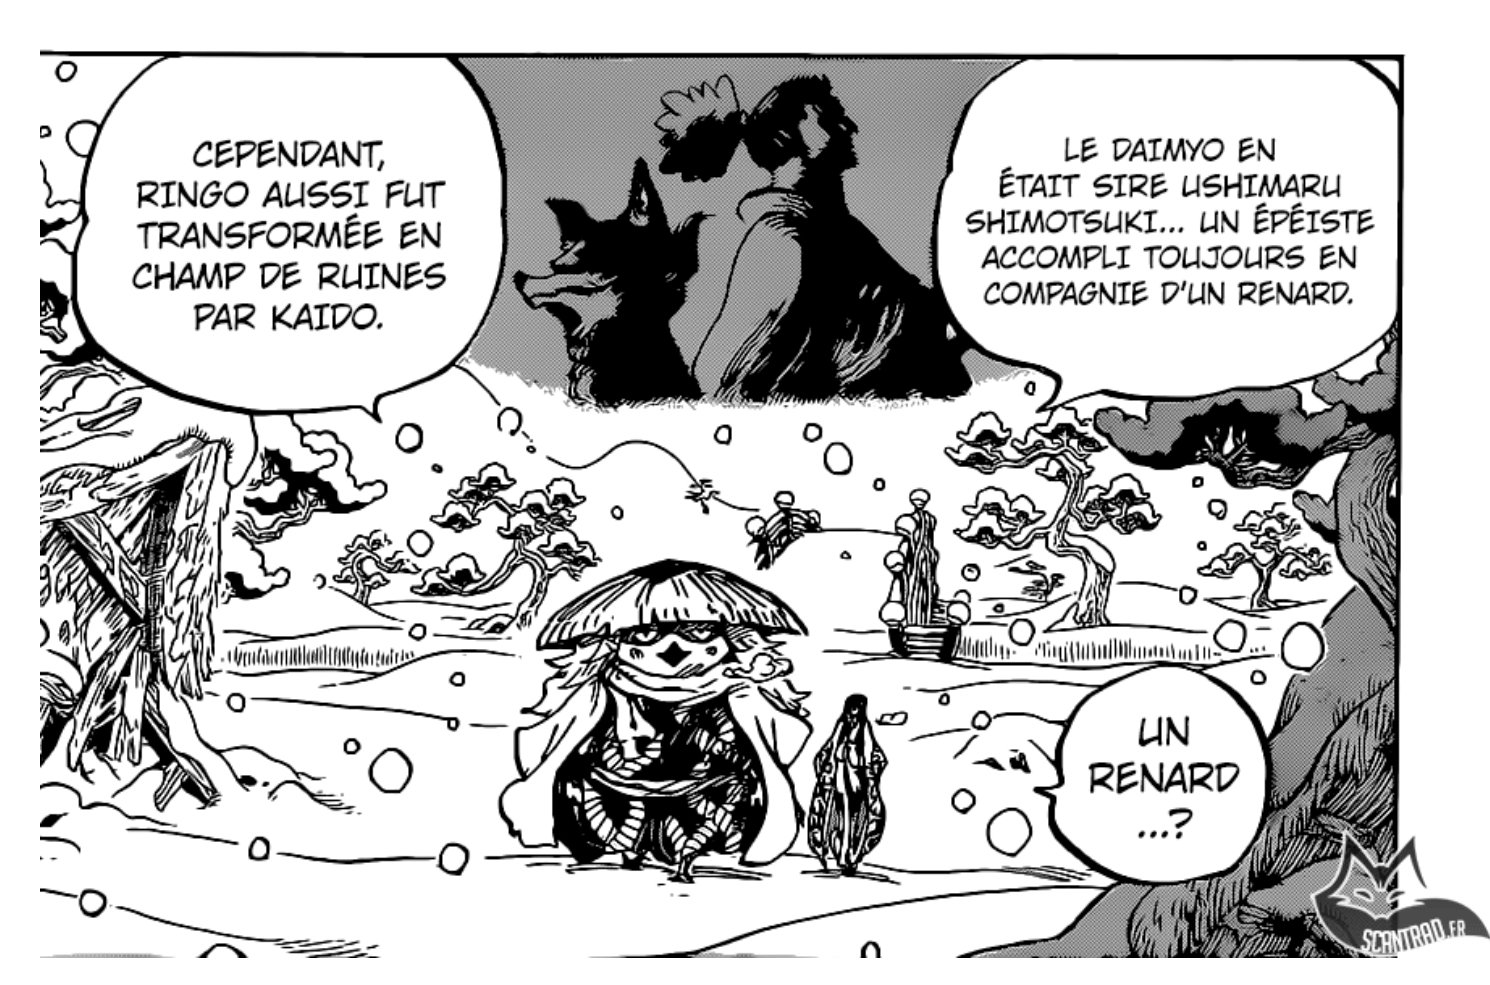 One Piece Chapitre 953 Page 3 Nouvelles Sorties Forums Mangas France